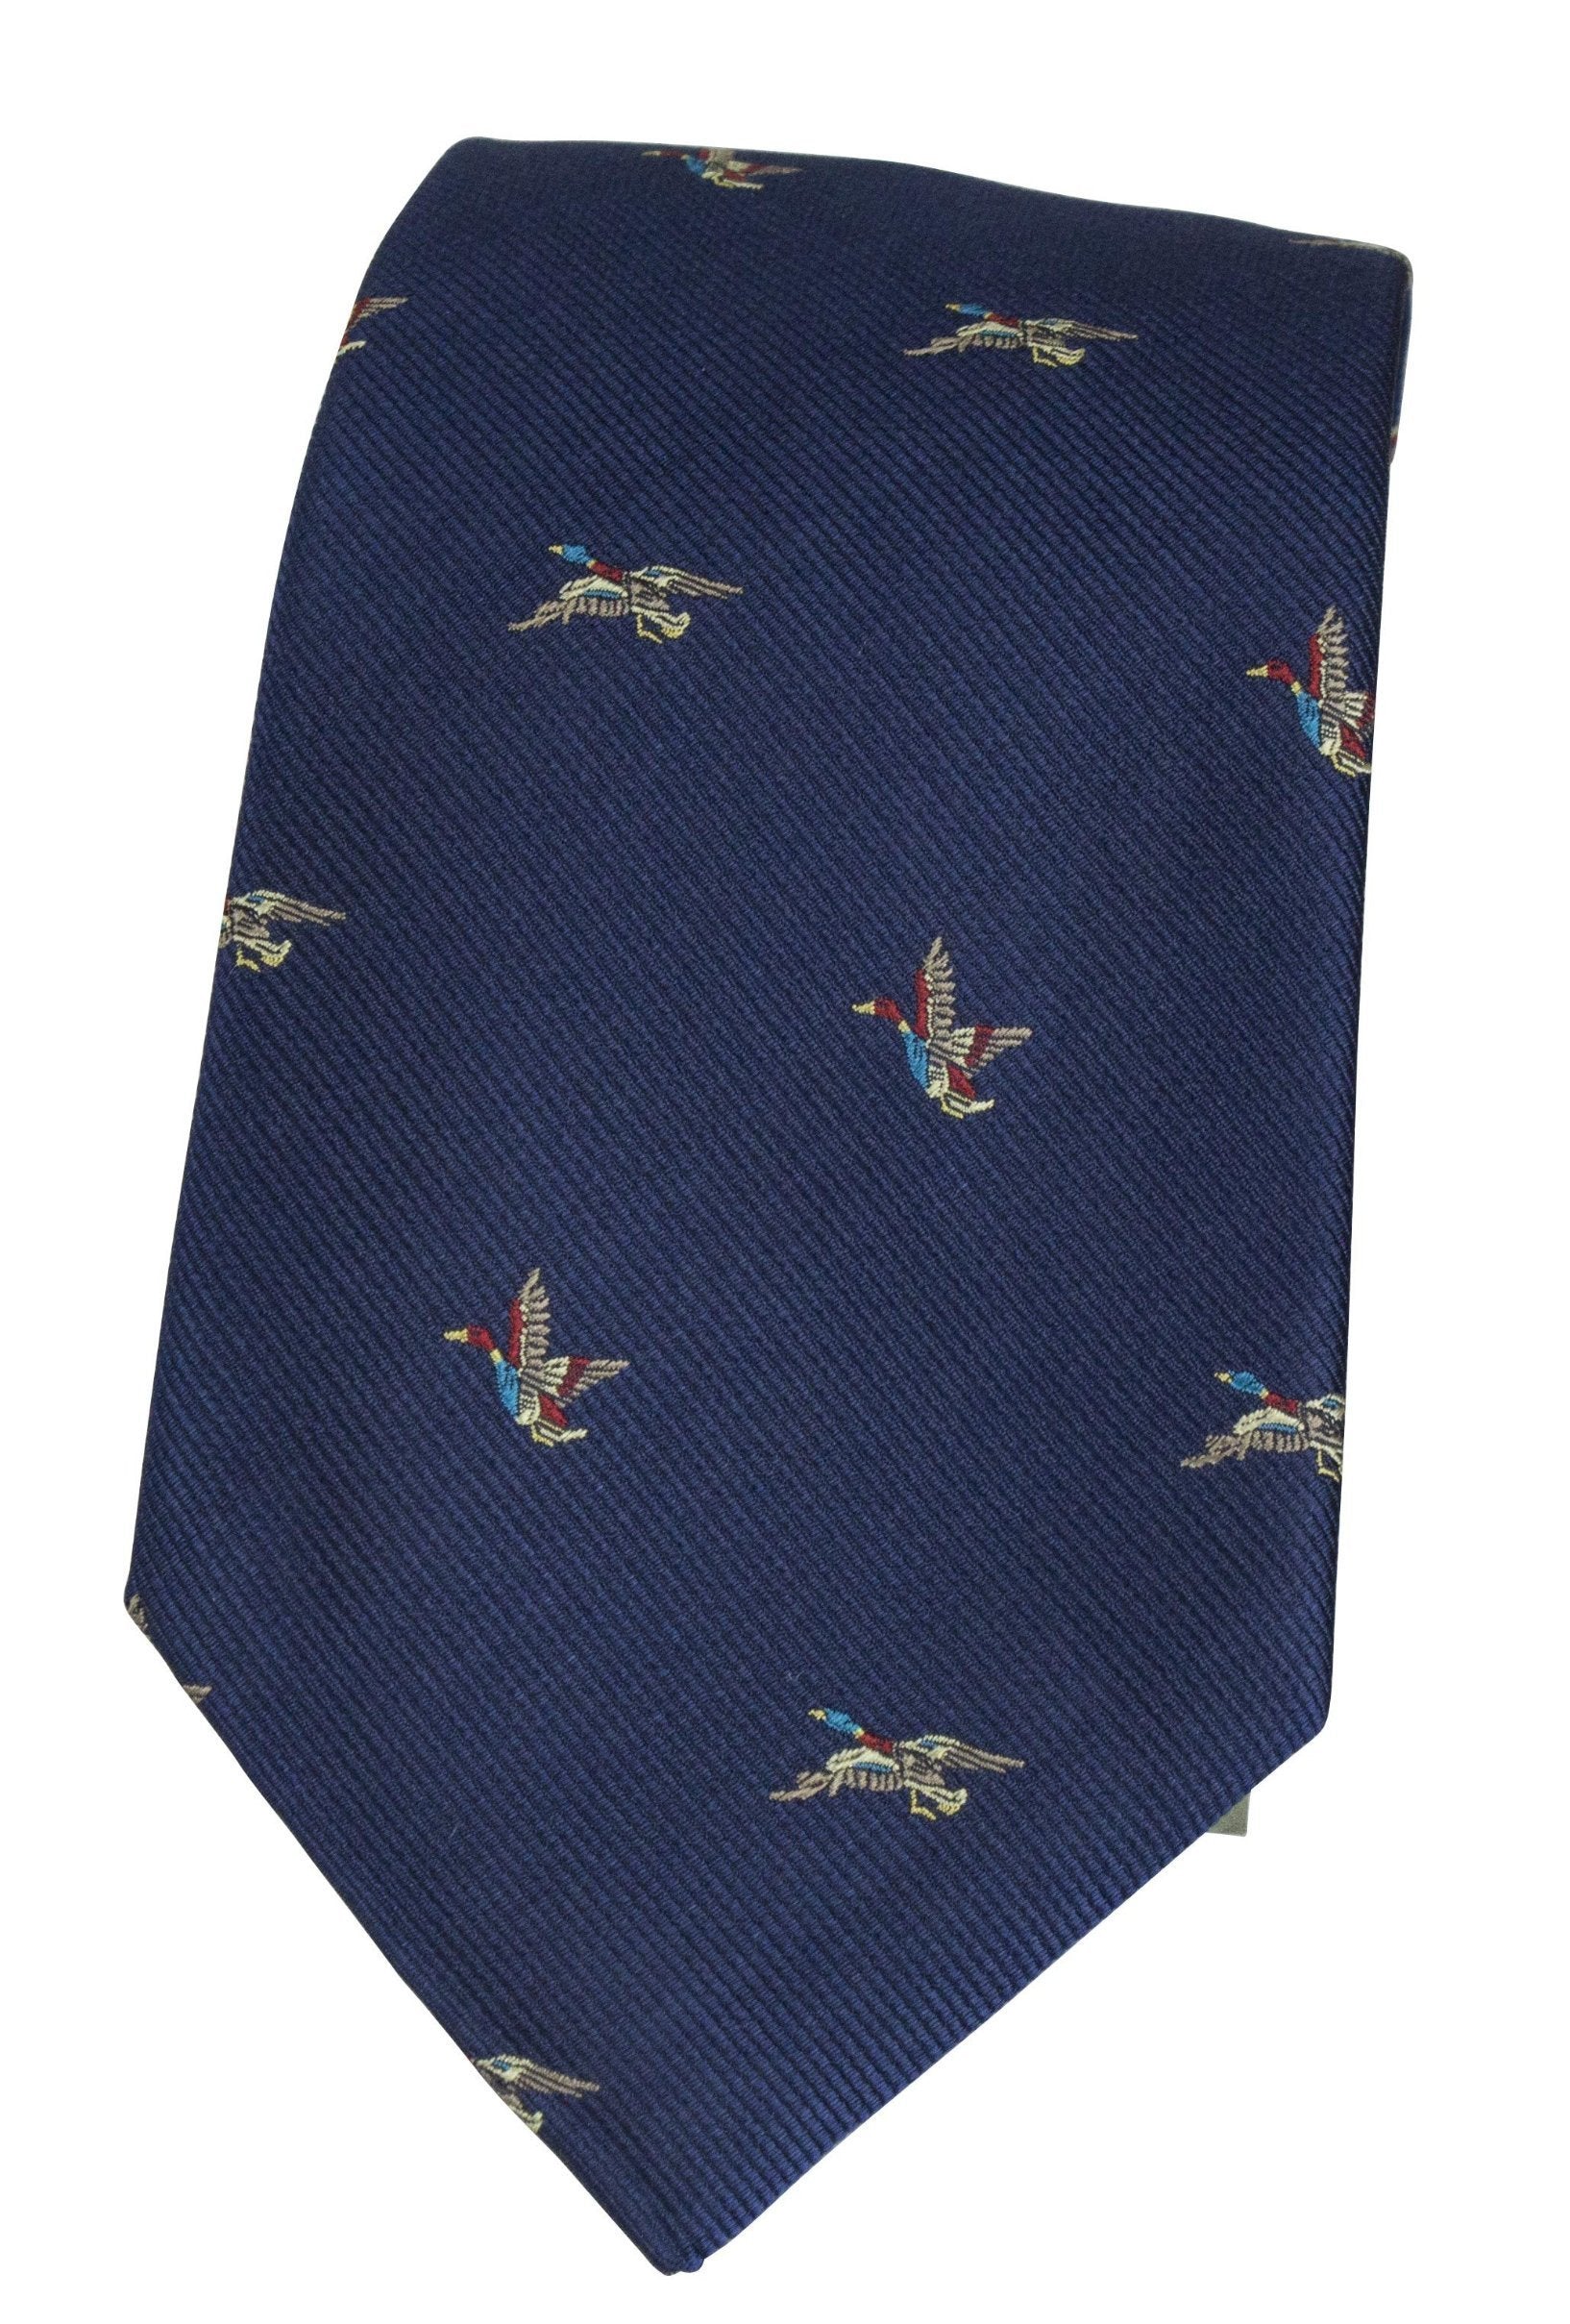 GT8 - 100% Silk Woven Tie - (2 Ducks) - NAVY - Oxford Blue